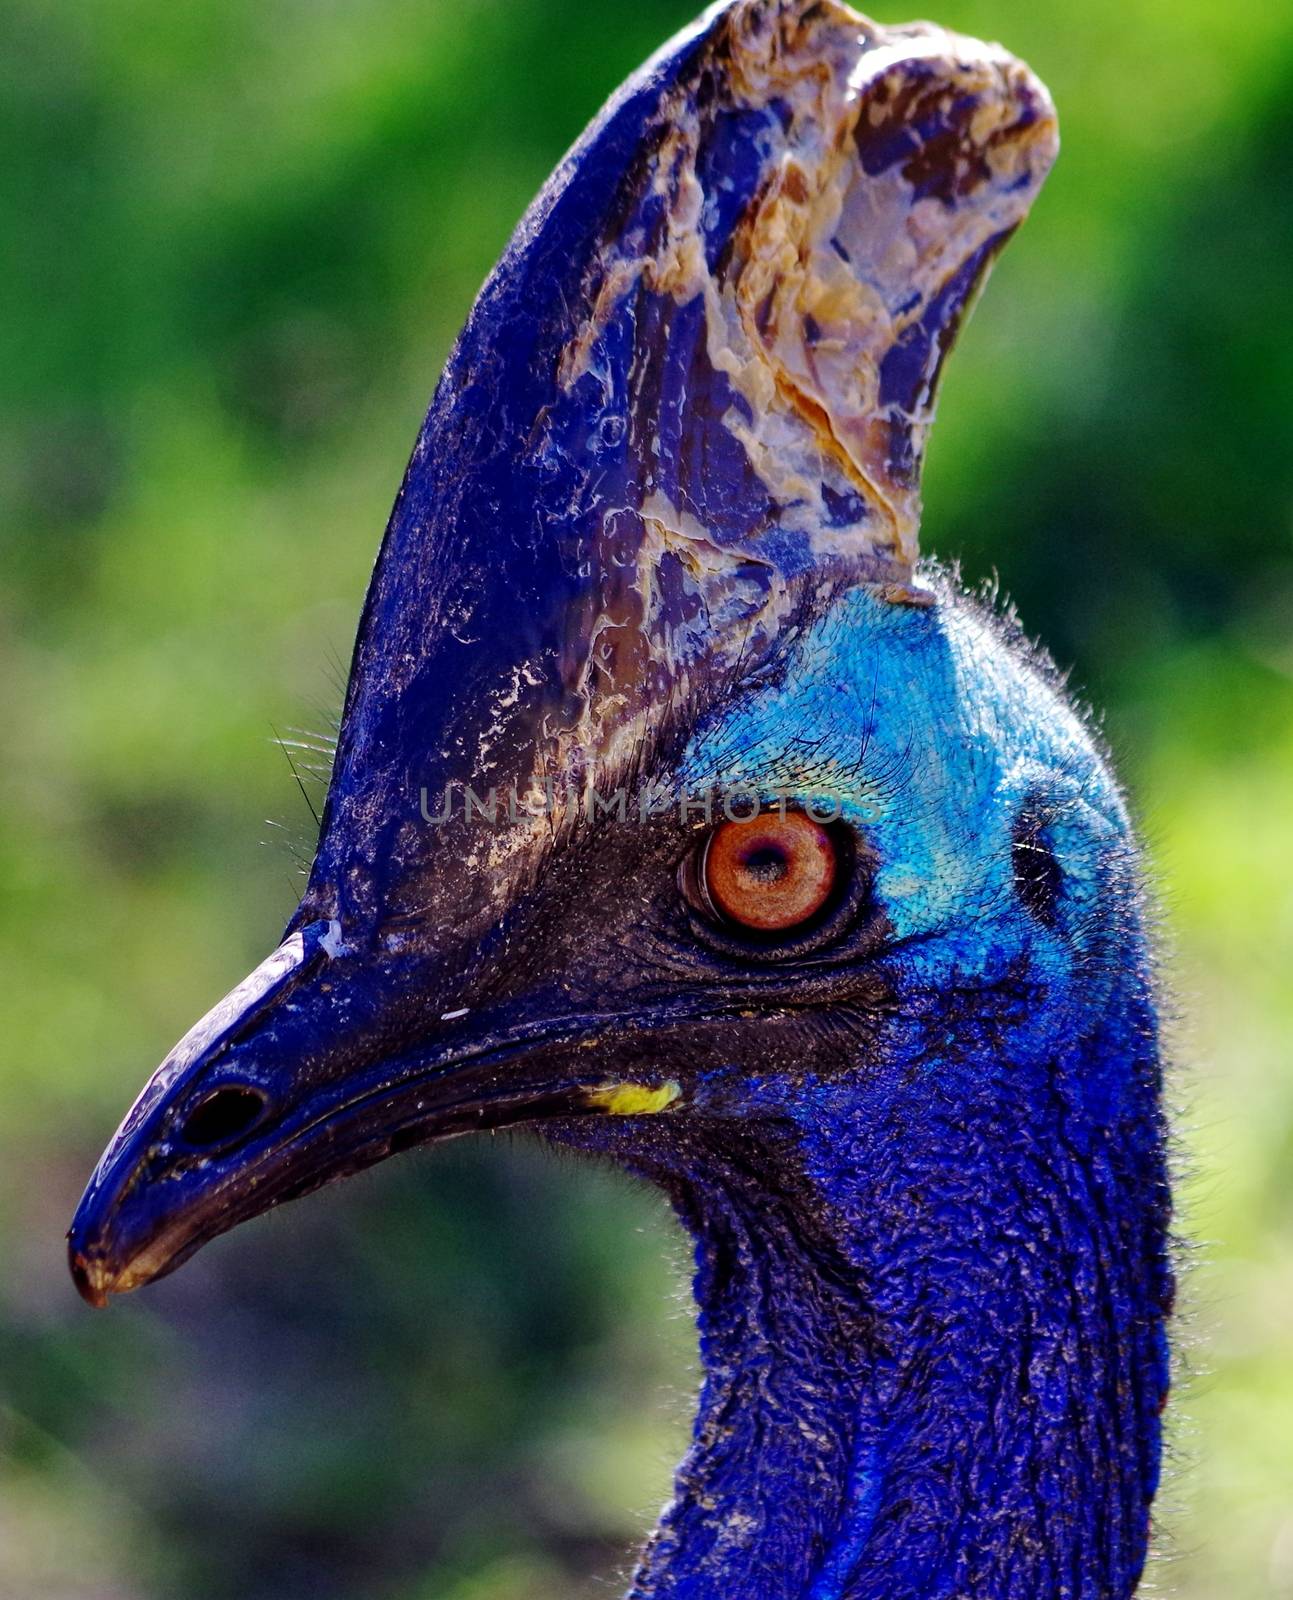 The blue horned head of a cassowary